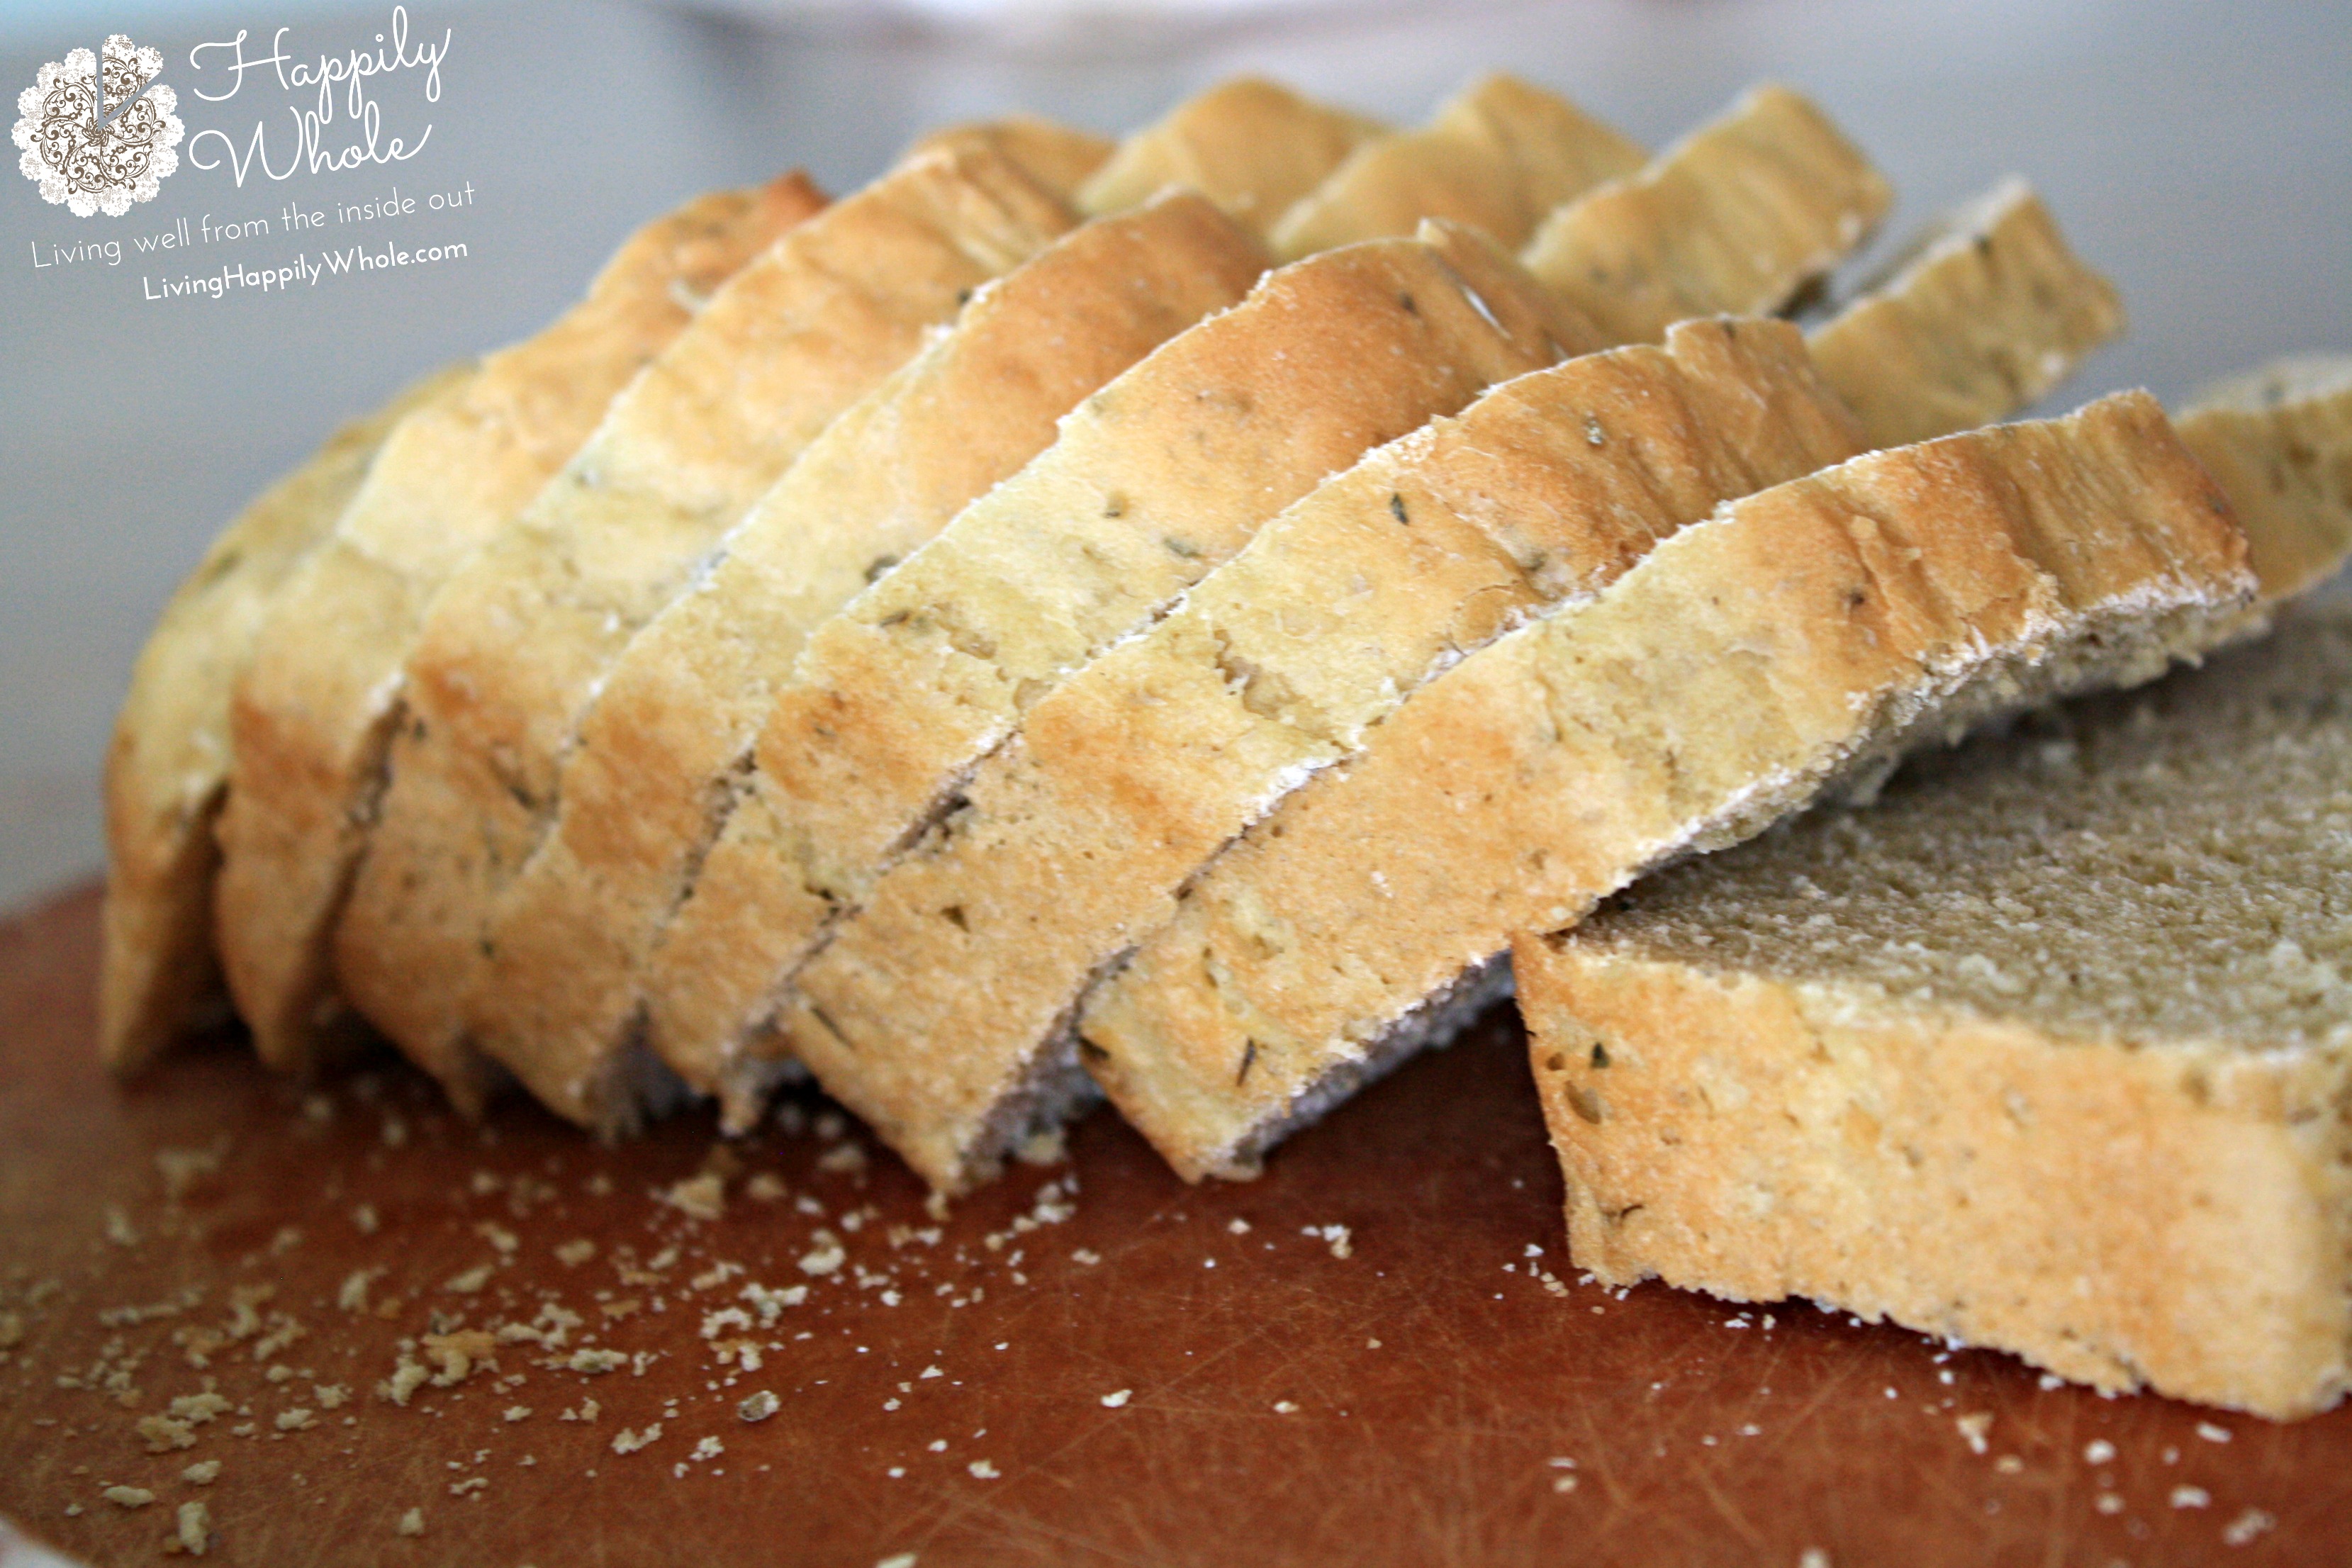 Homemade herb bread with Einkorn flour